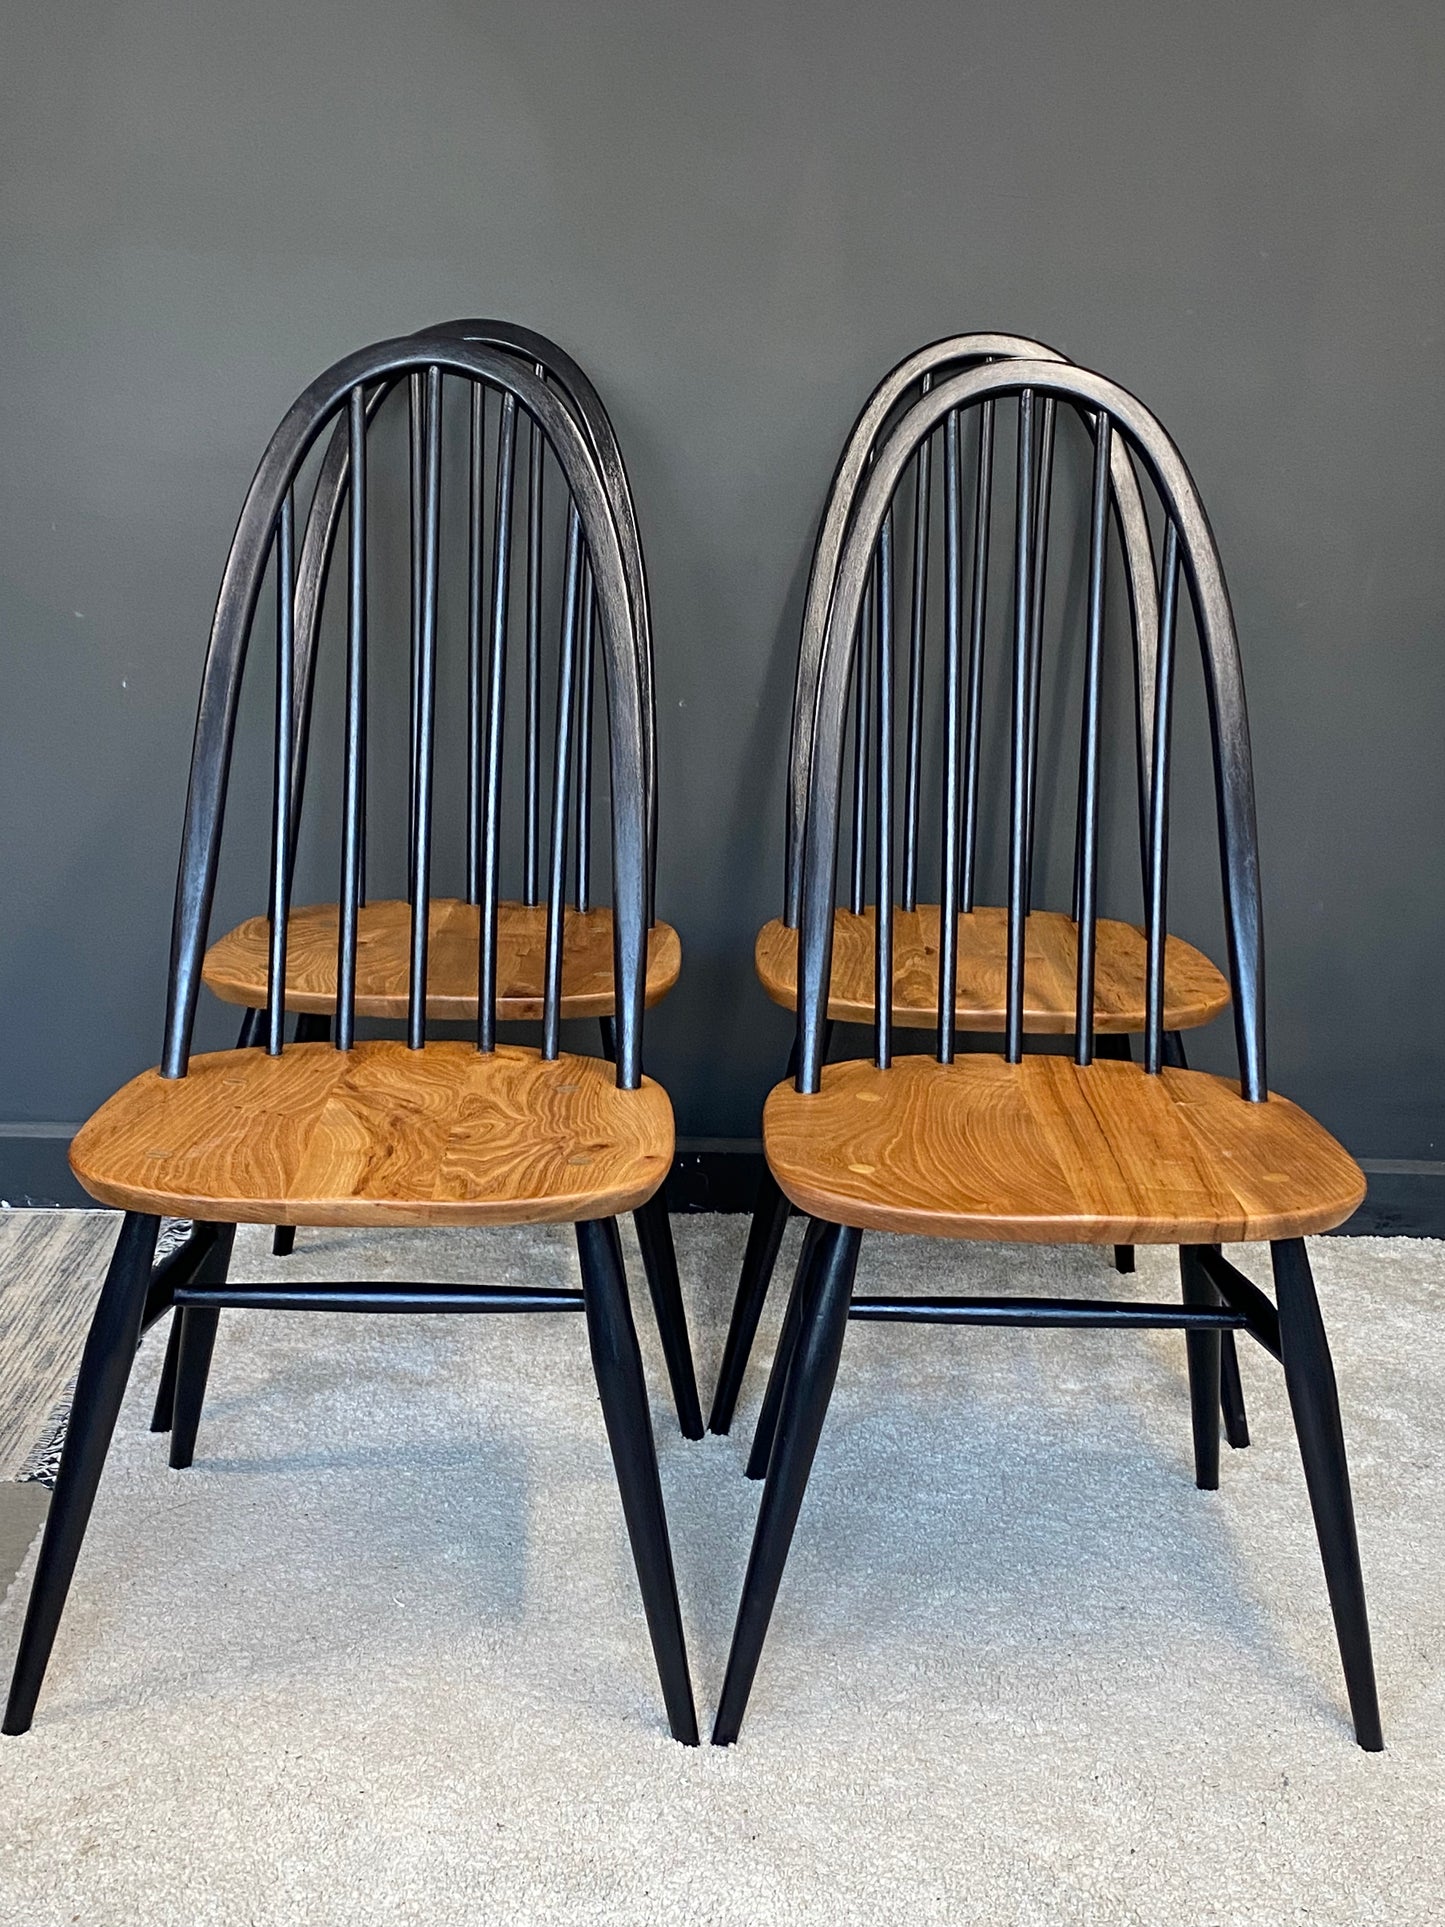 Vintage Ercol Quaker Chairs